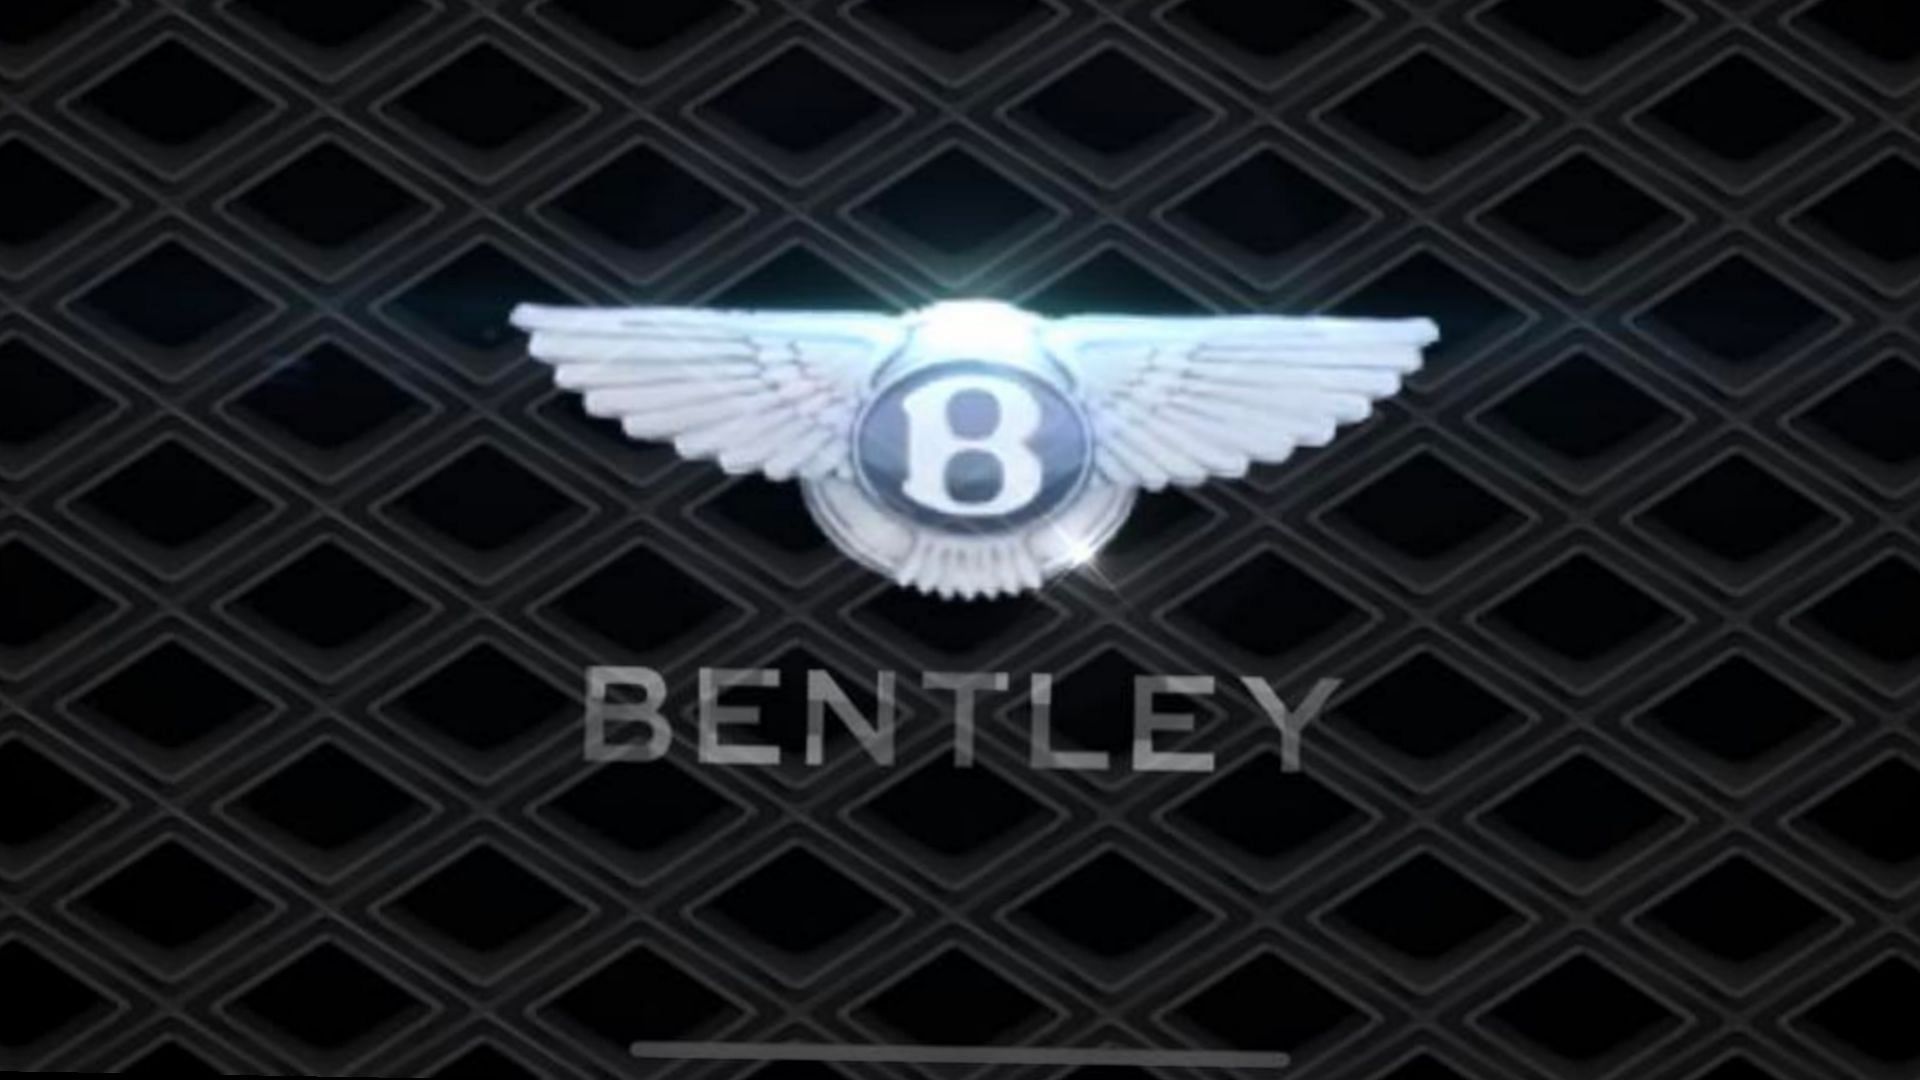 Bentley collaboration event is now live in BGMI (Image via Krafton) 